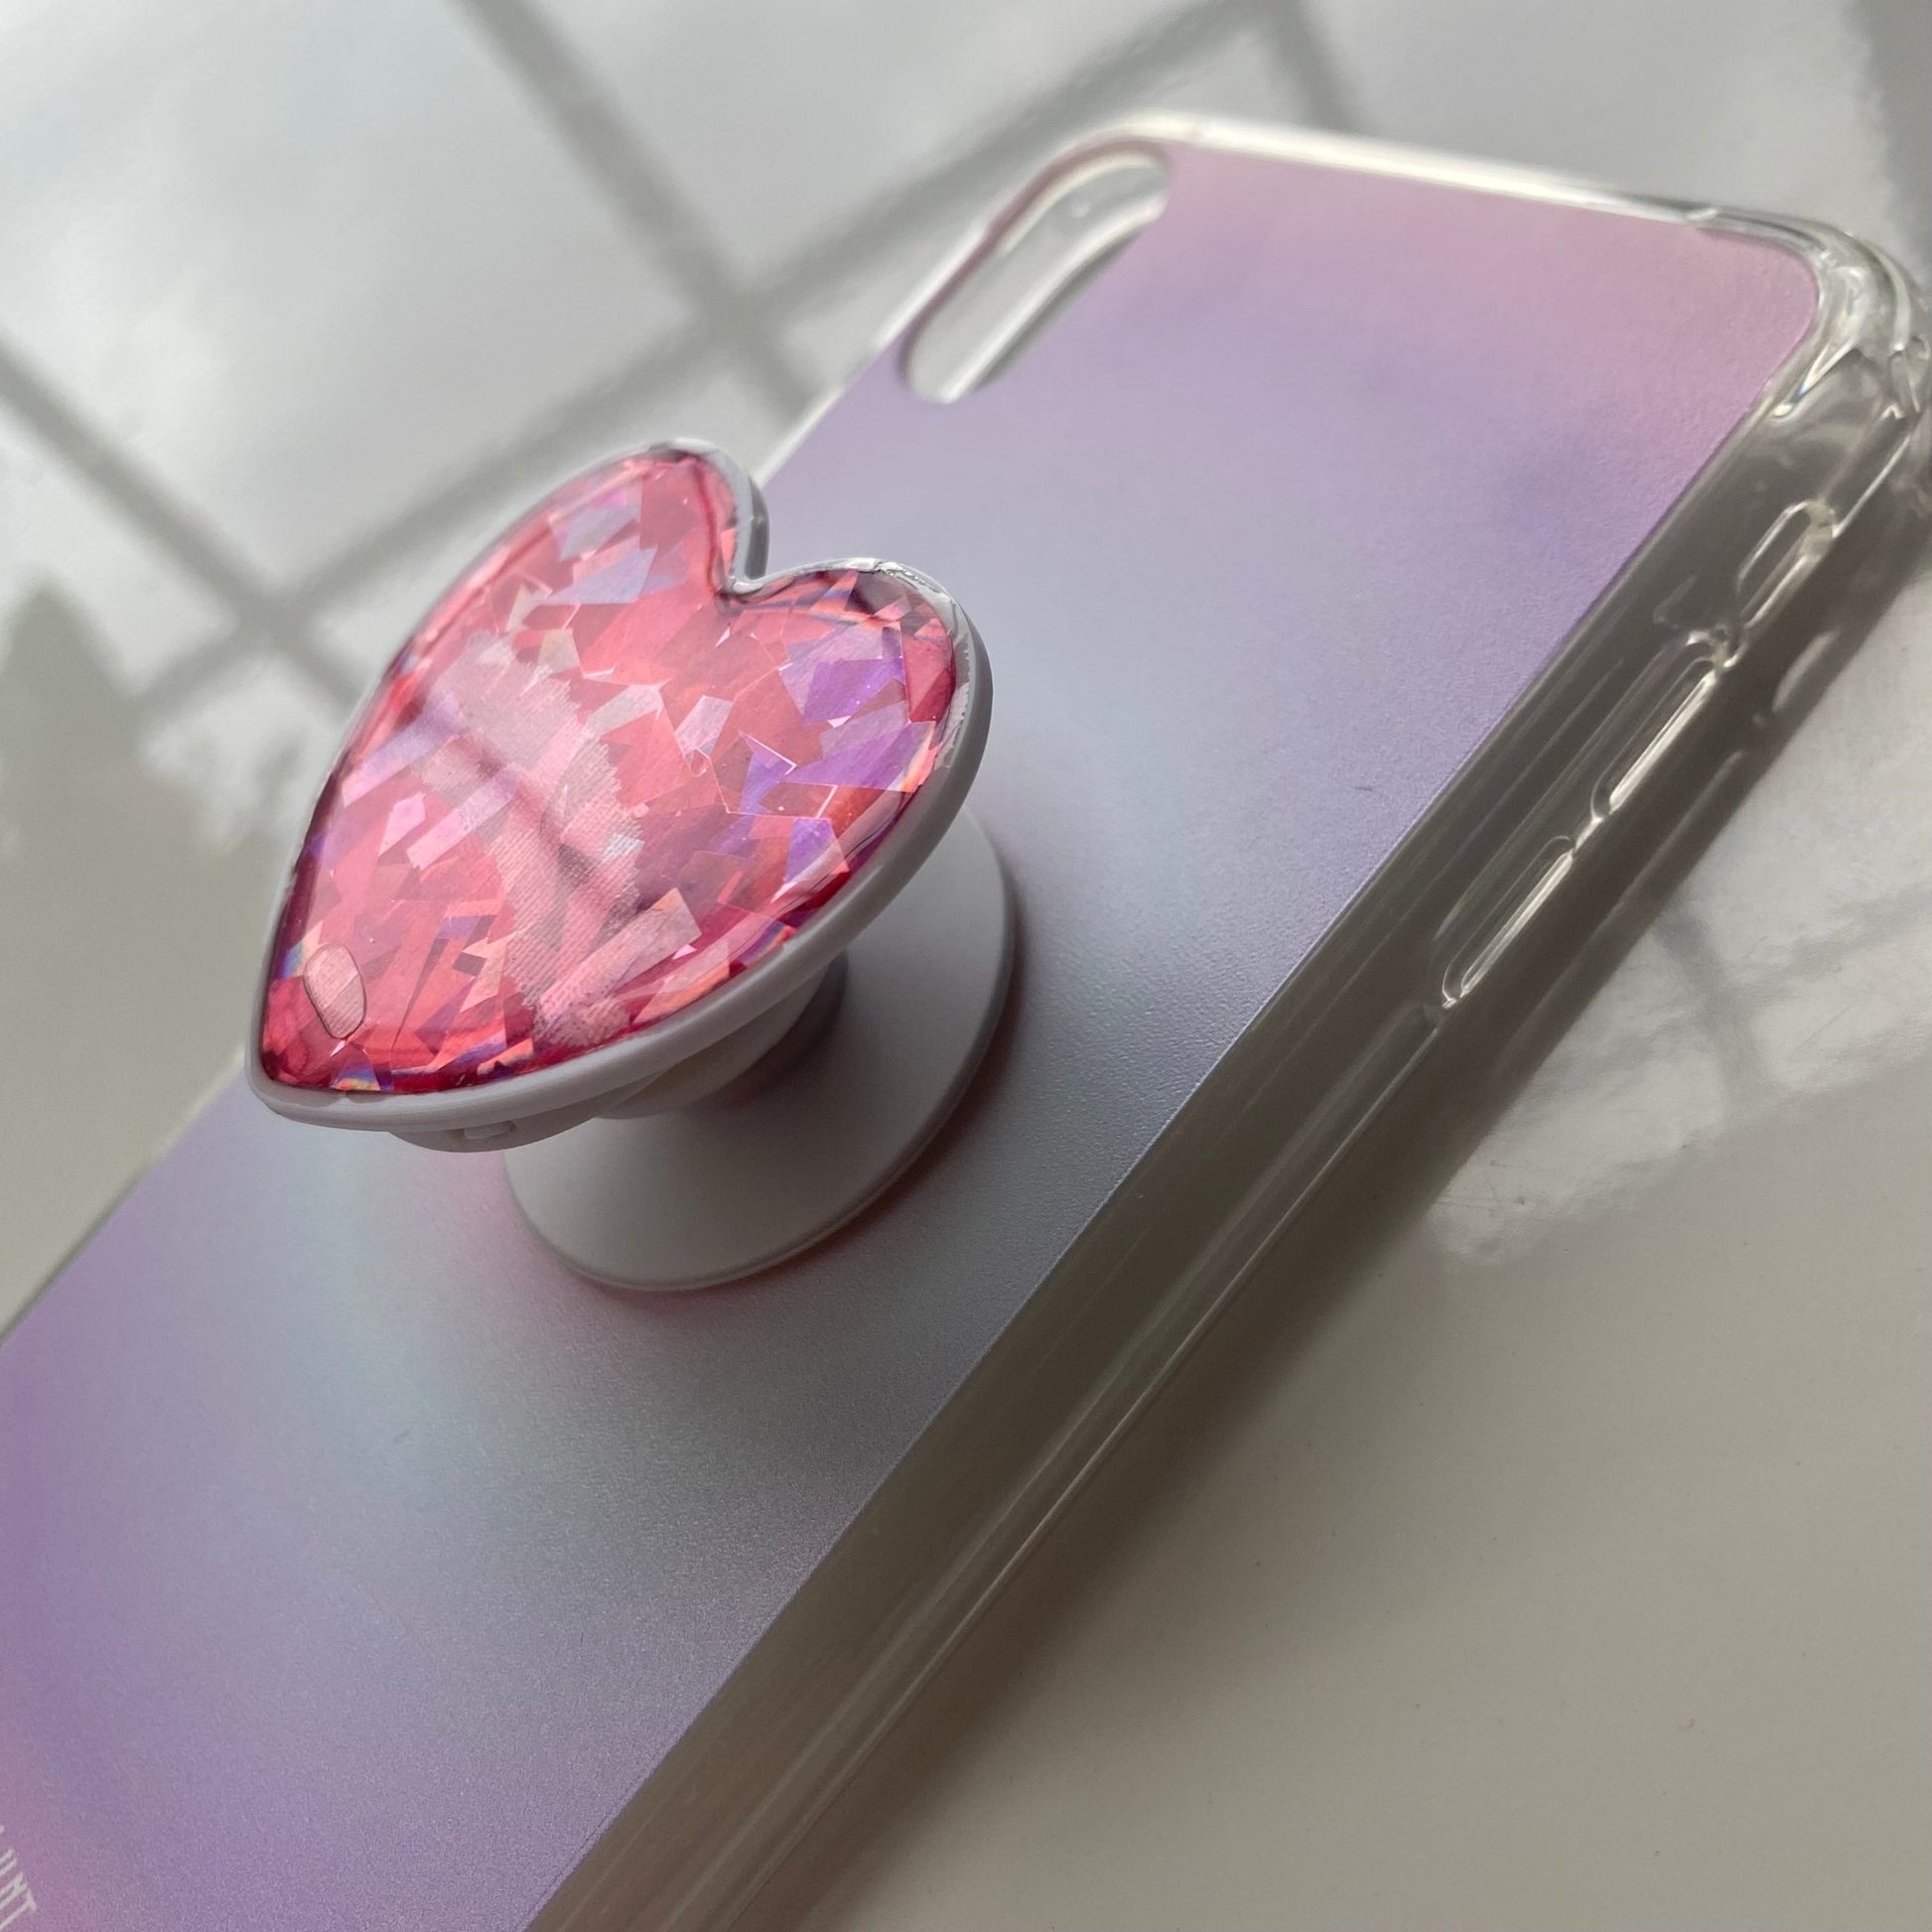 Pink Gem Phone Grip - blunt cases